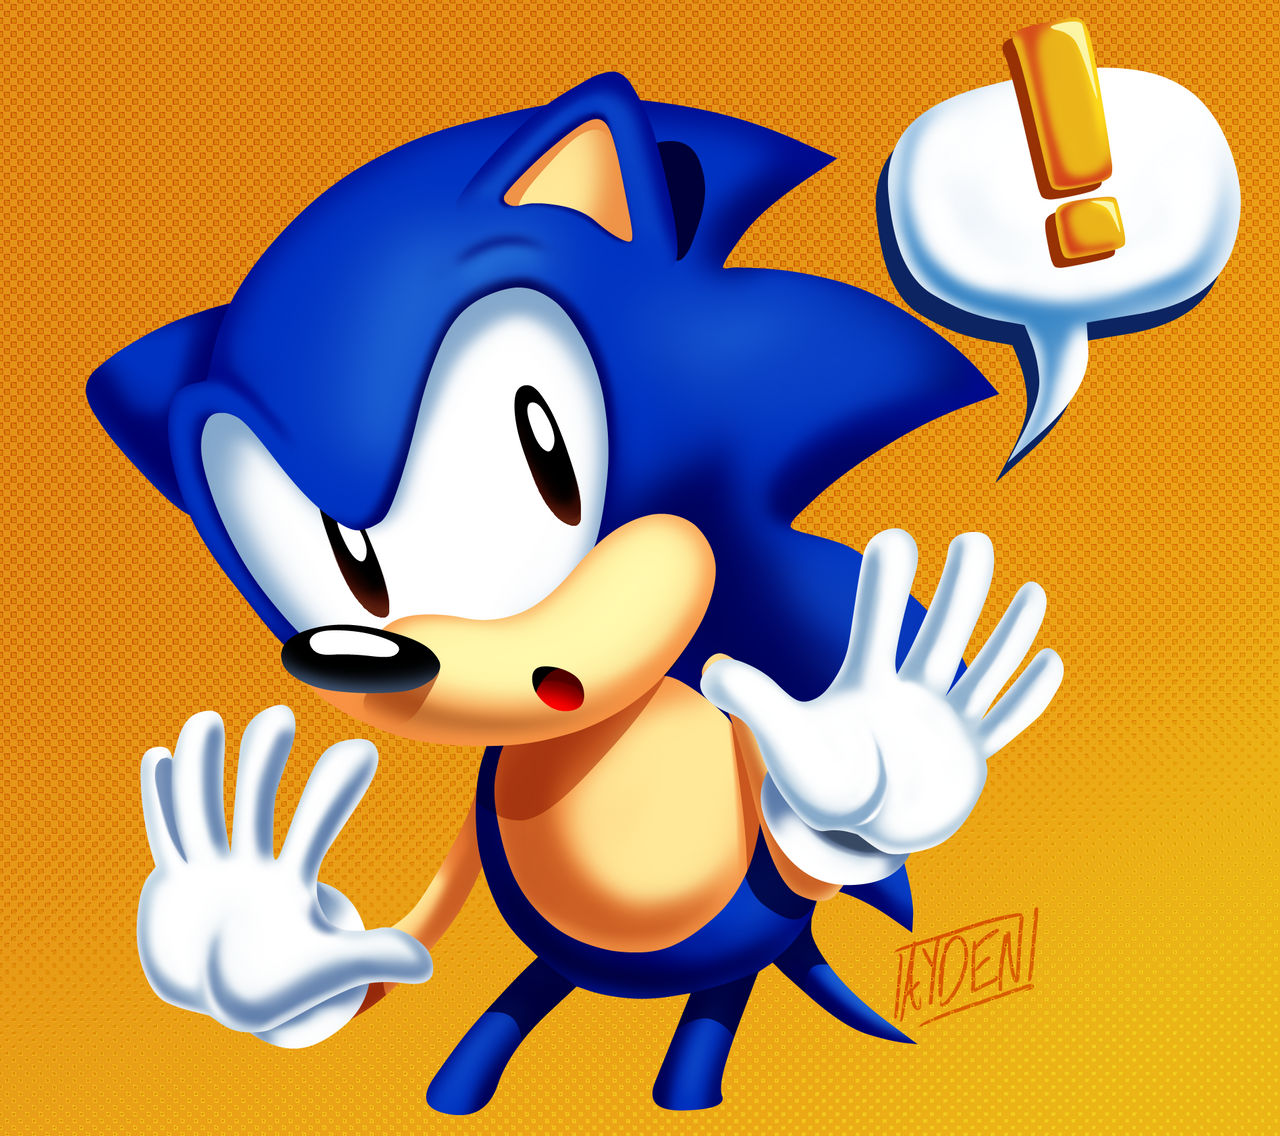 Classic Sonic - Artwork by Elesis-Knight on DeviantArt